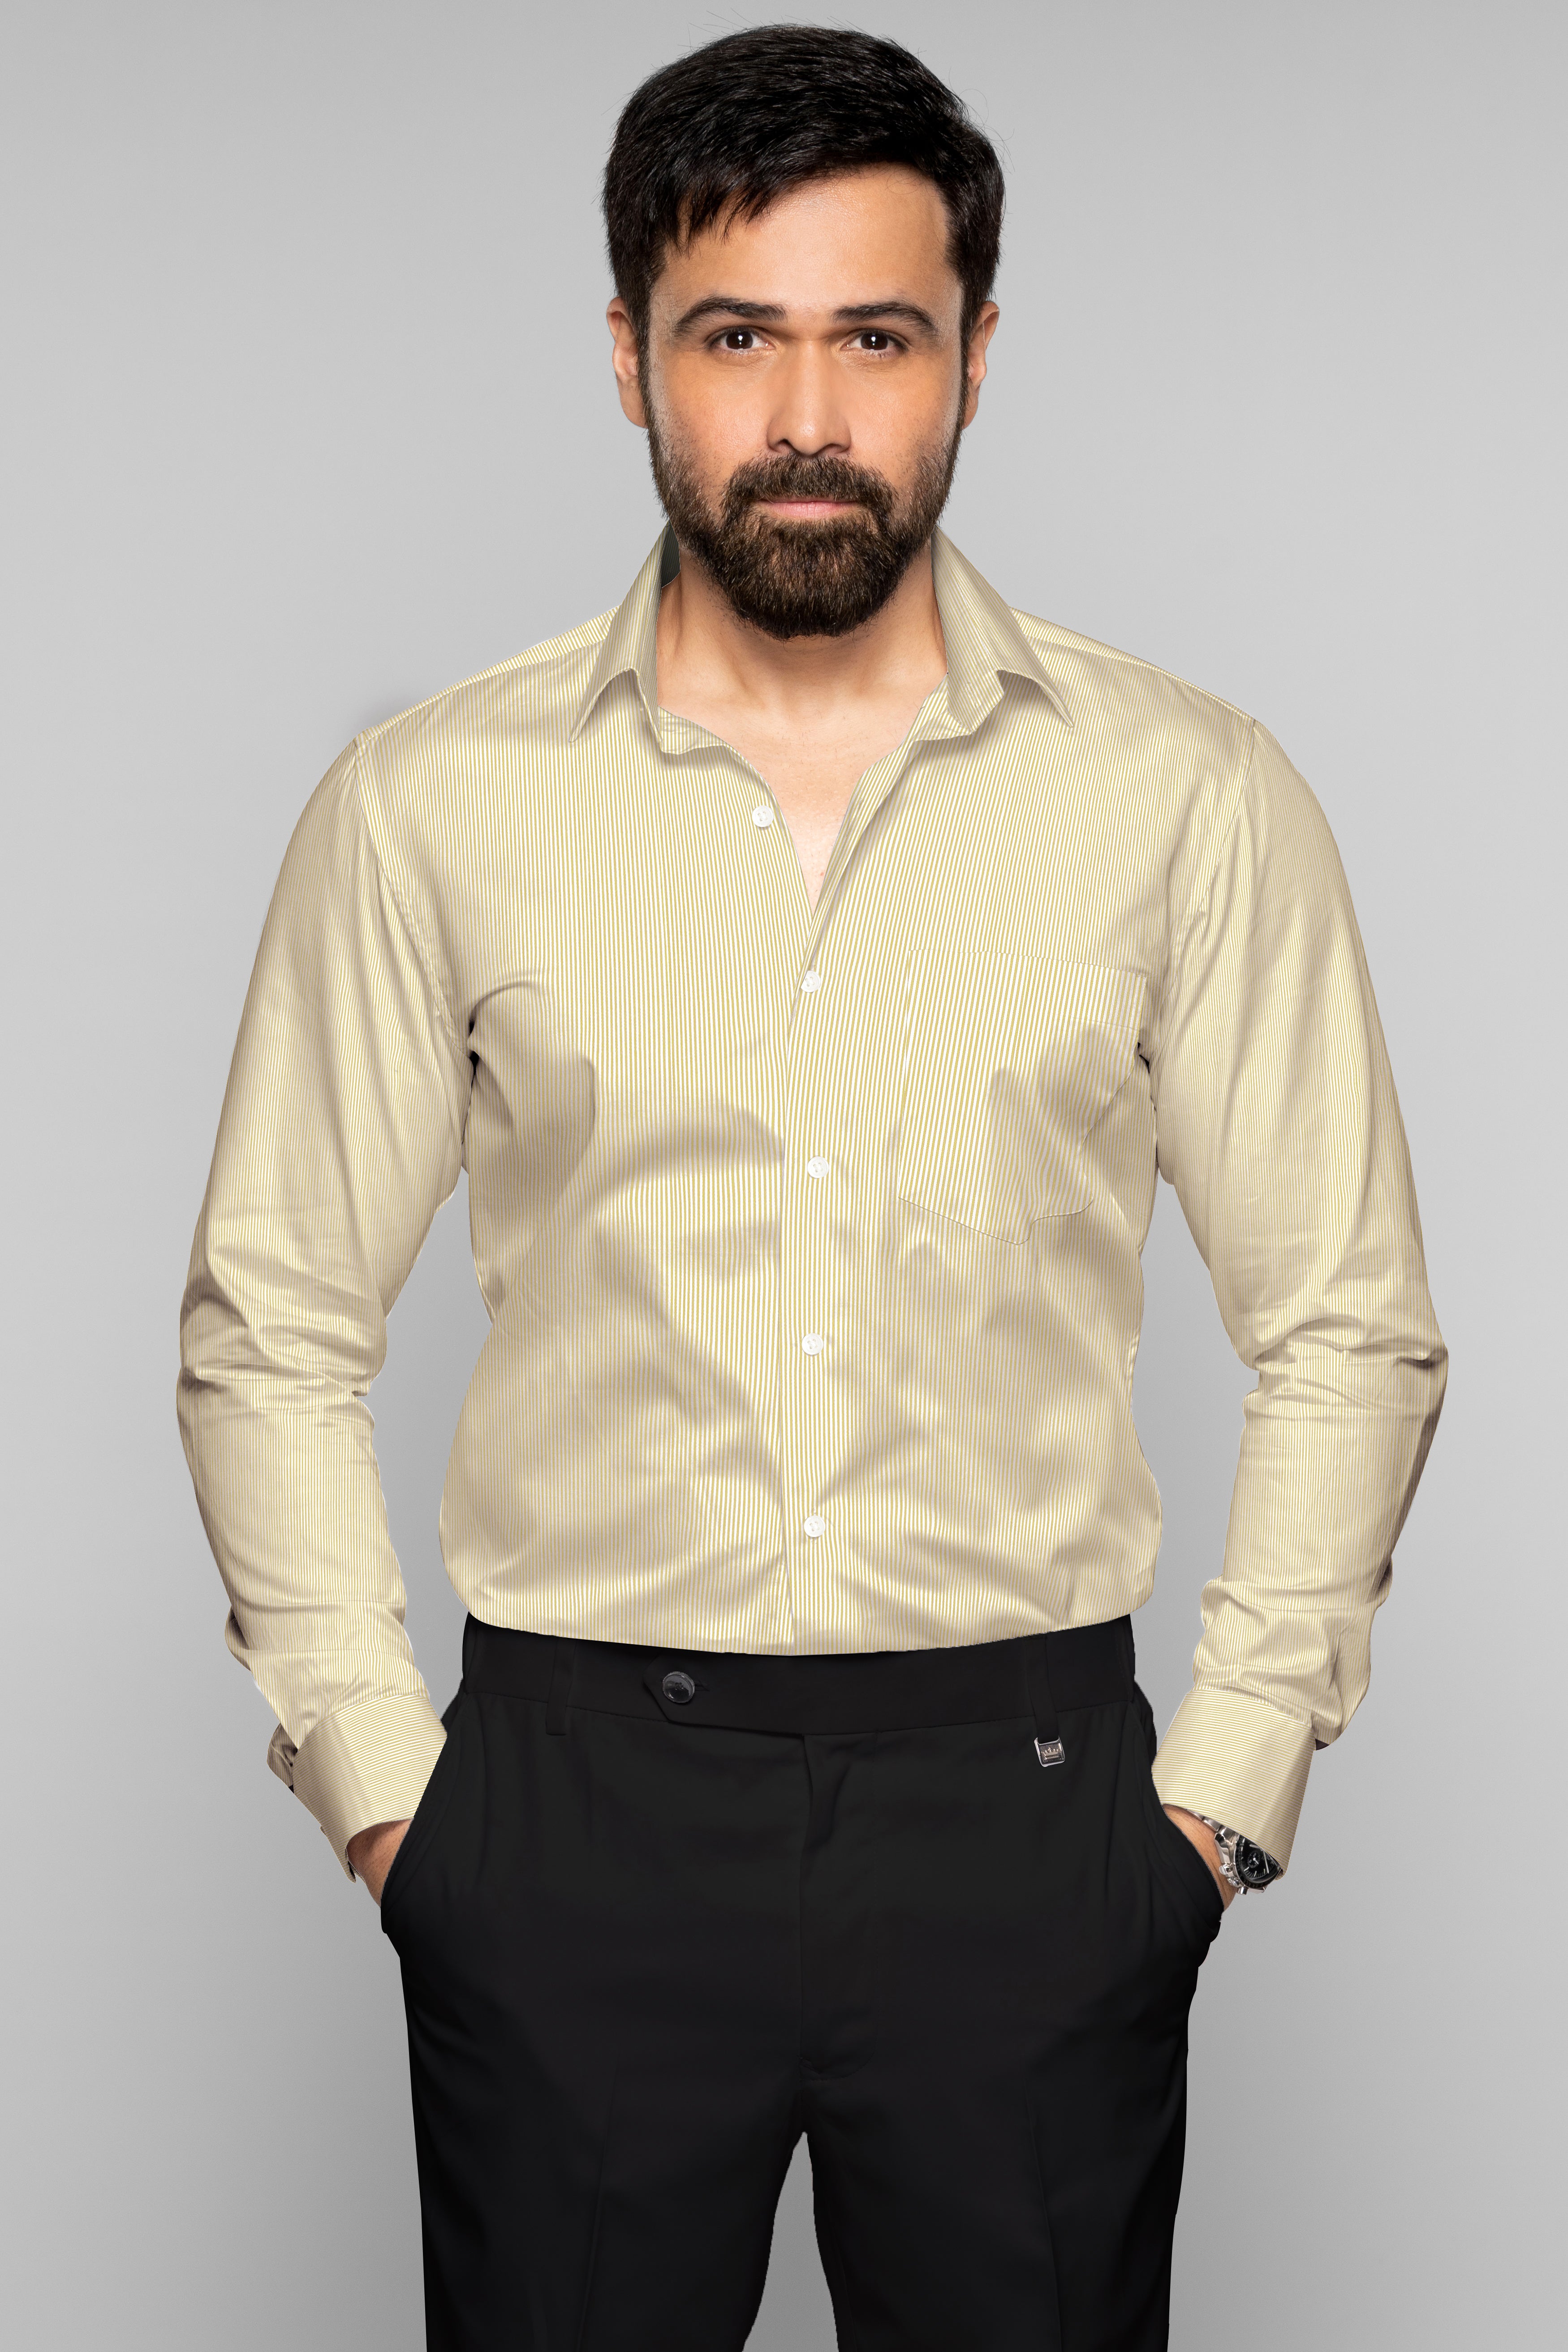 Desert Brown and White PinStriped Premium Cotton Shirt